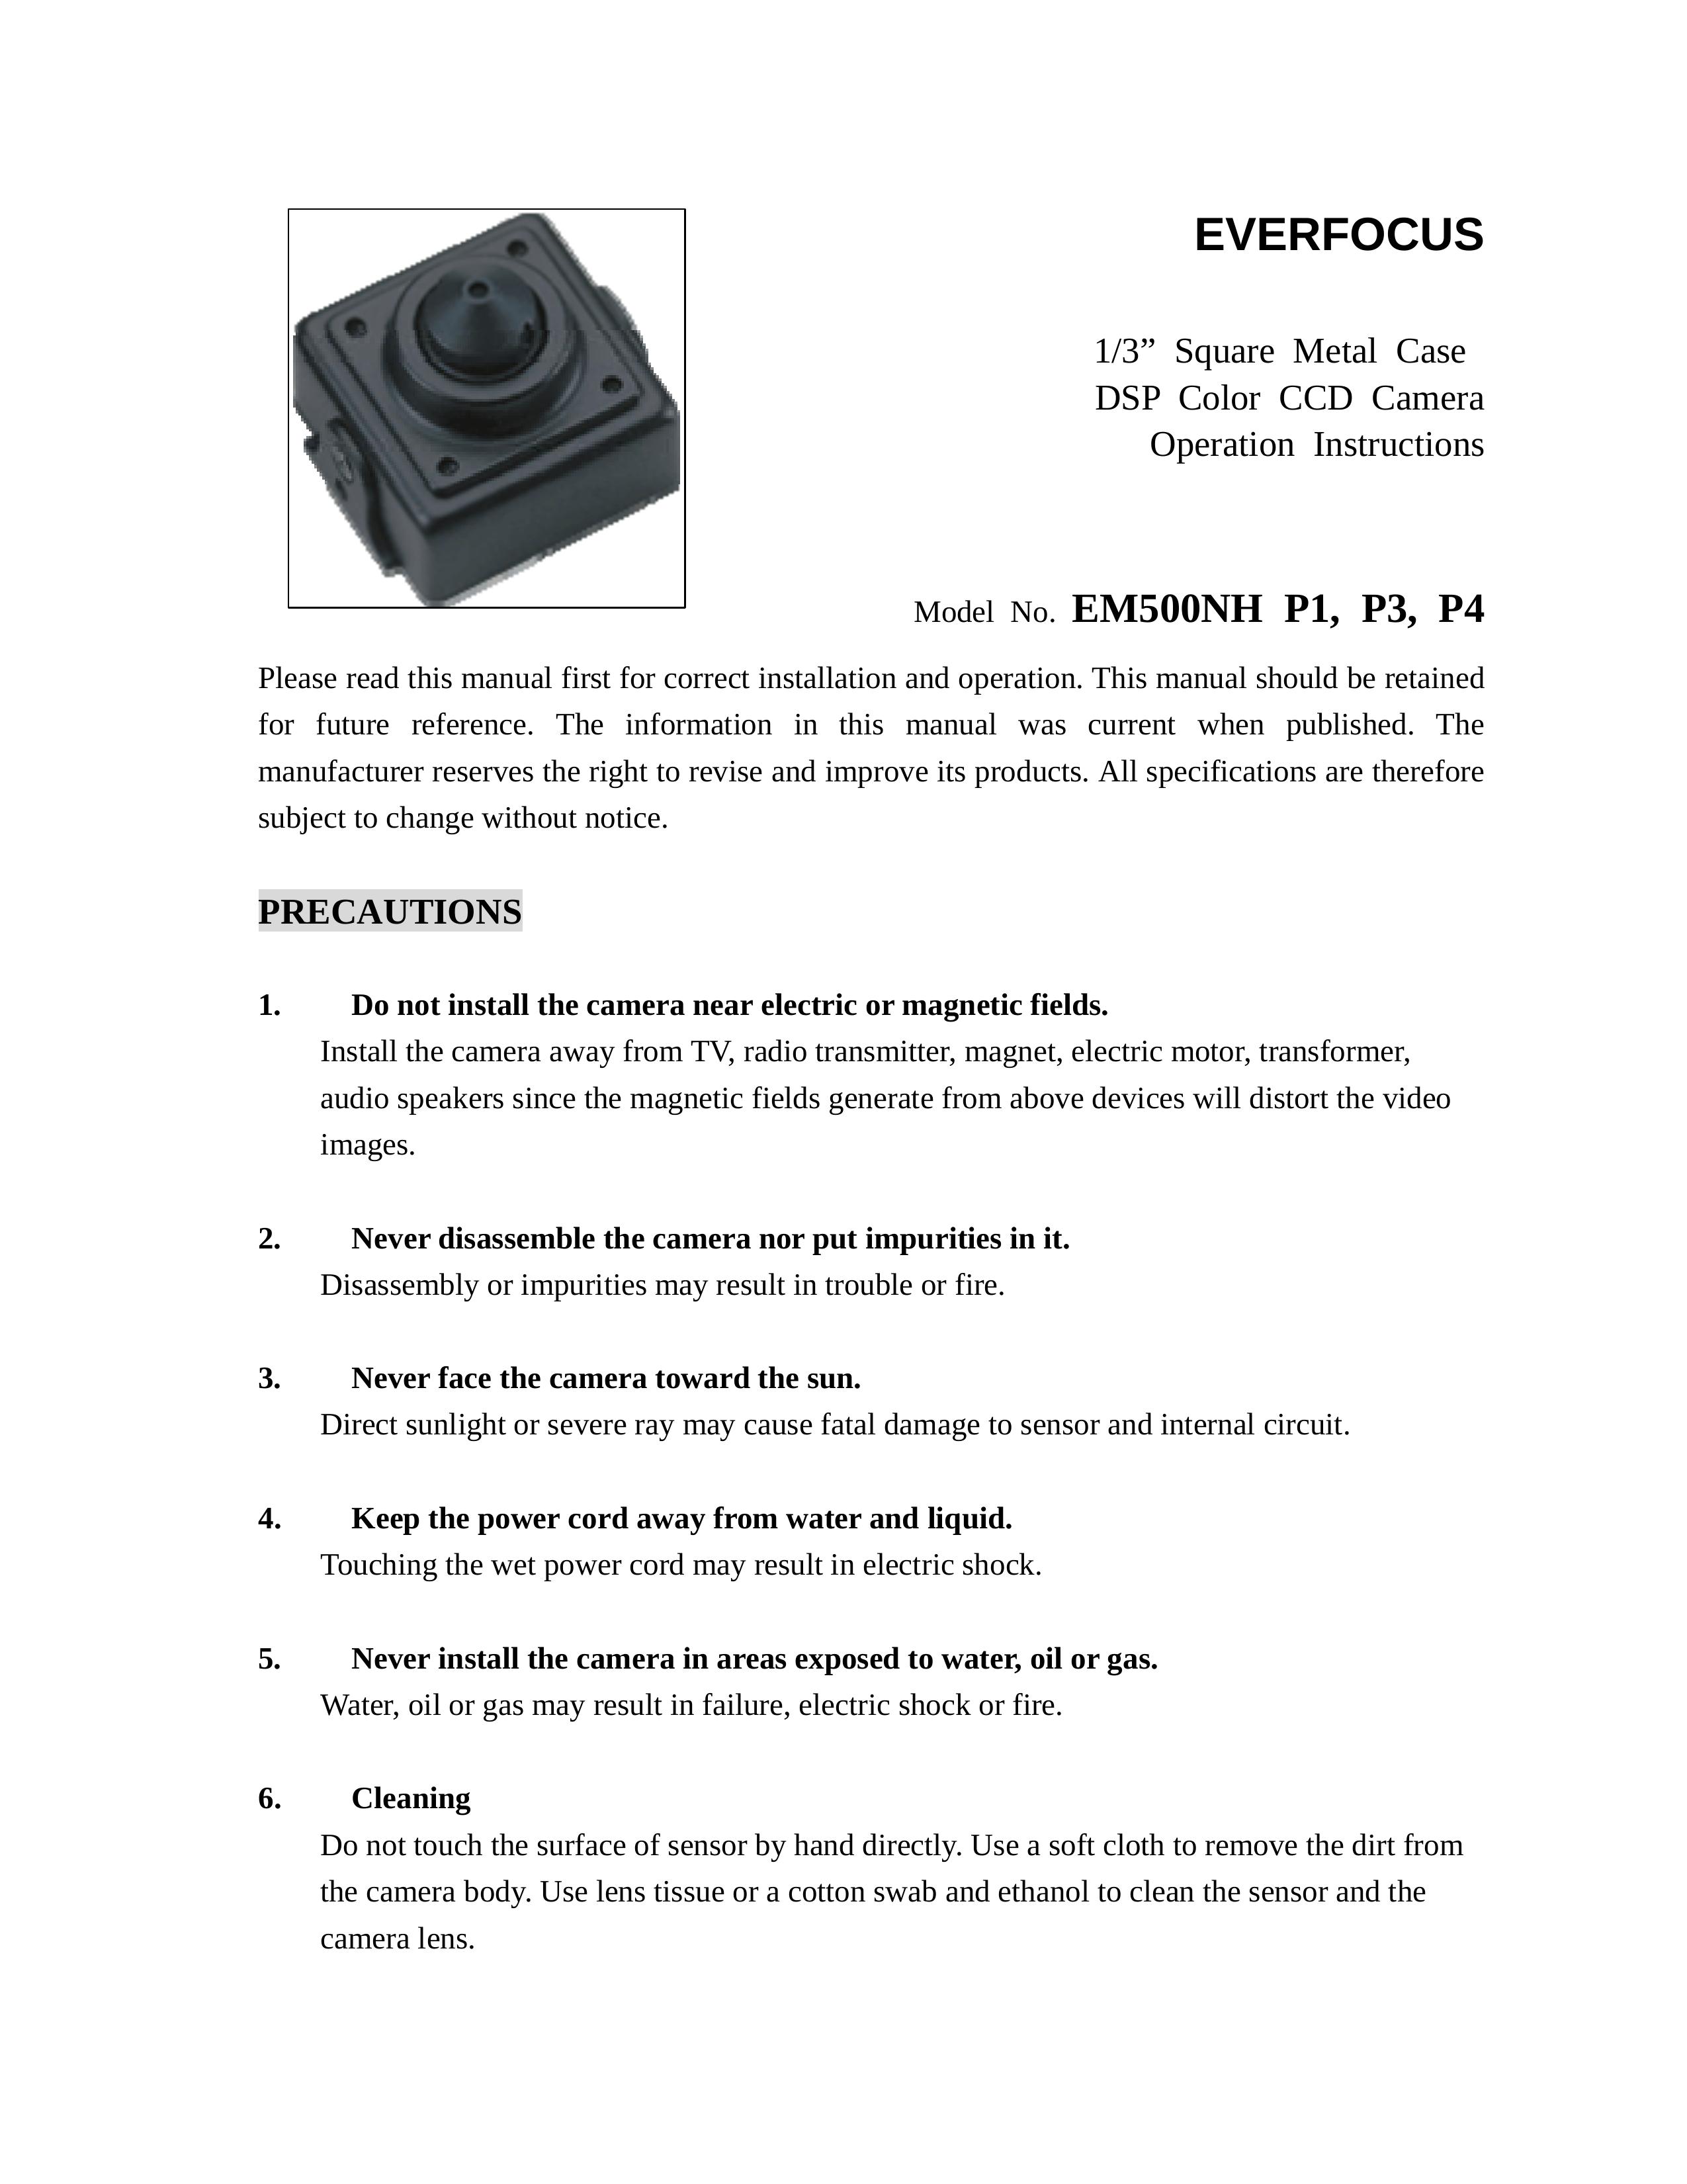 EverFocus EM500NH P1 Digital Camera User Manual